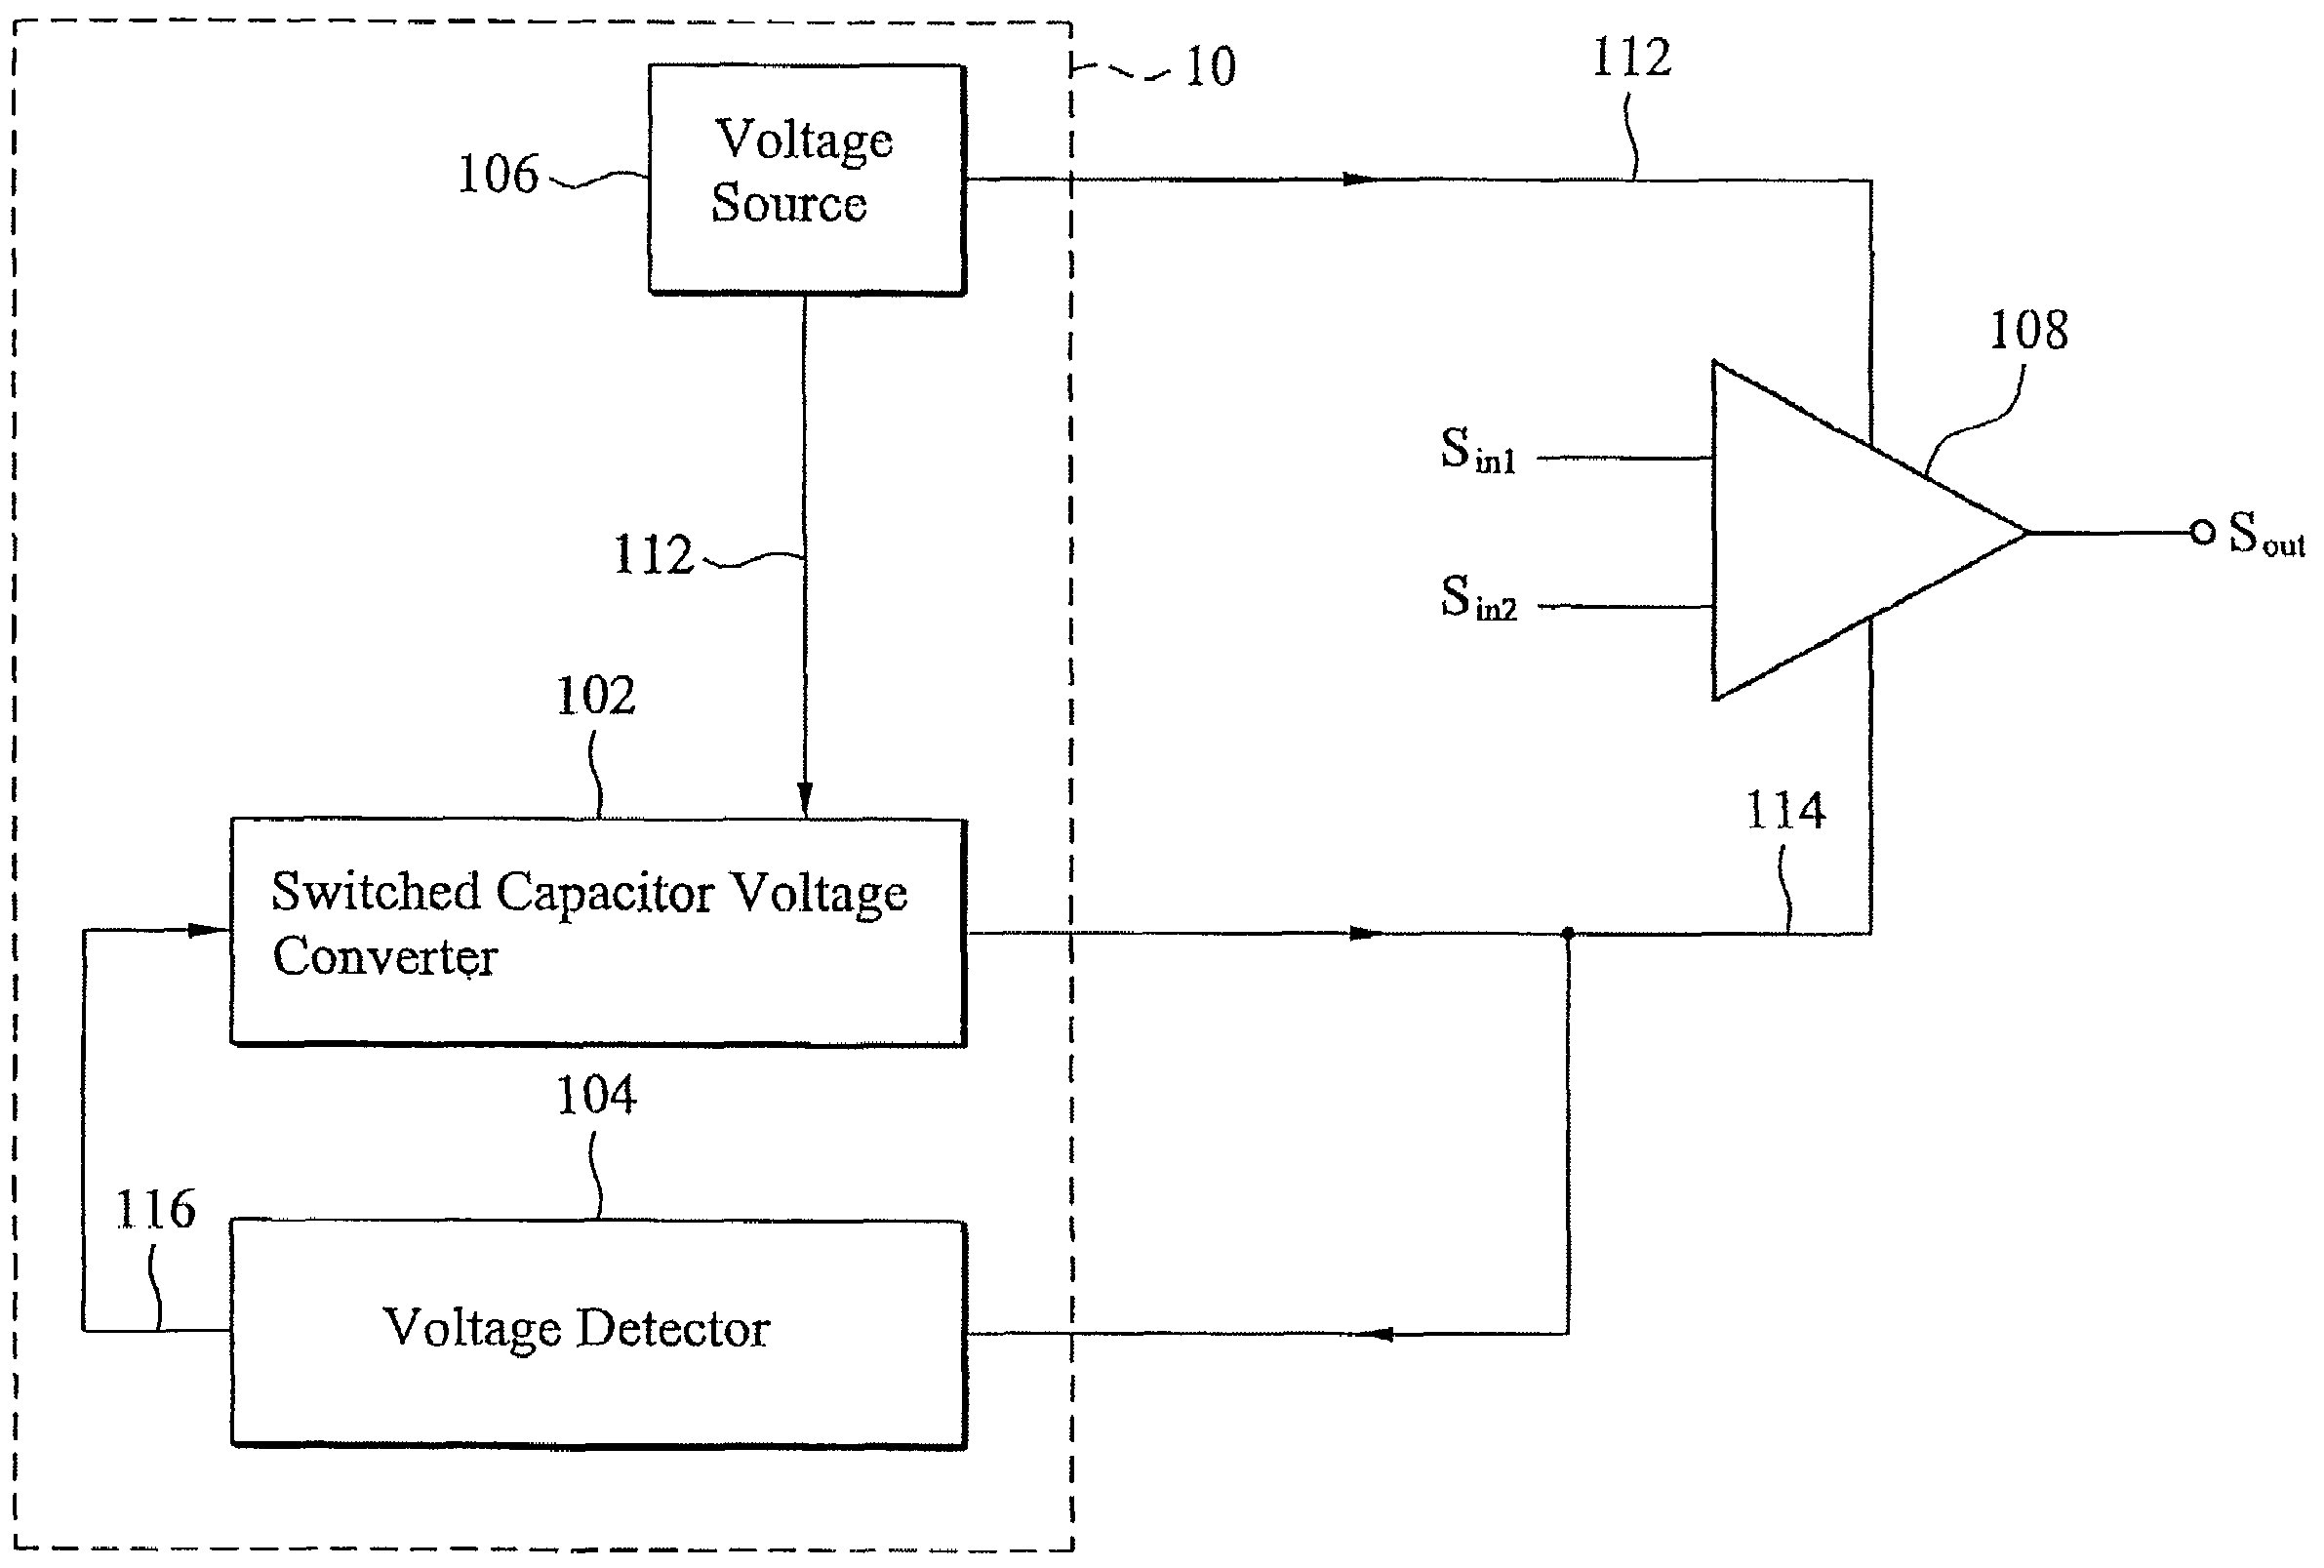 Voltage generating apparatus and methods